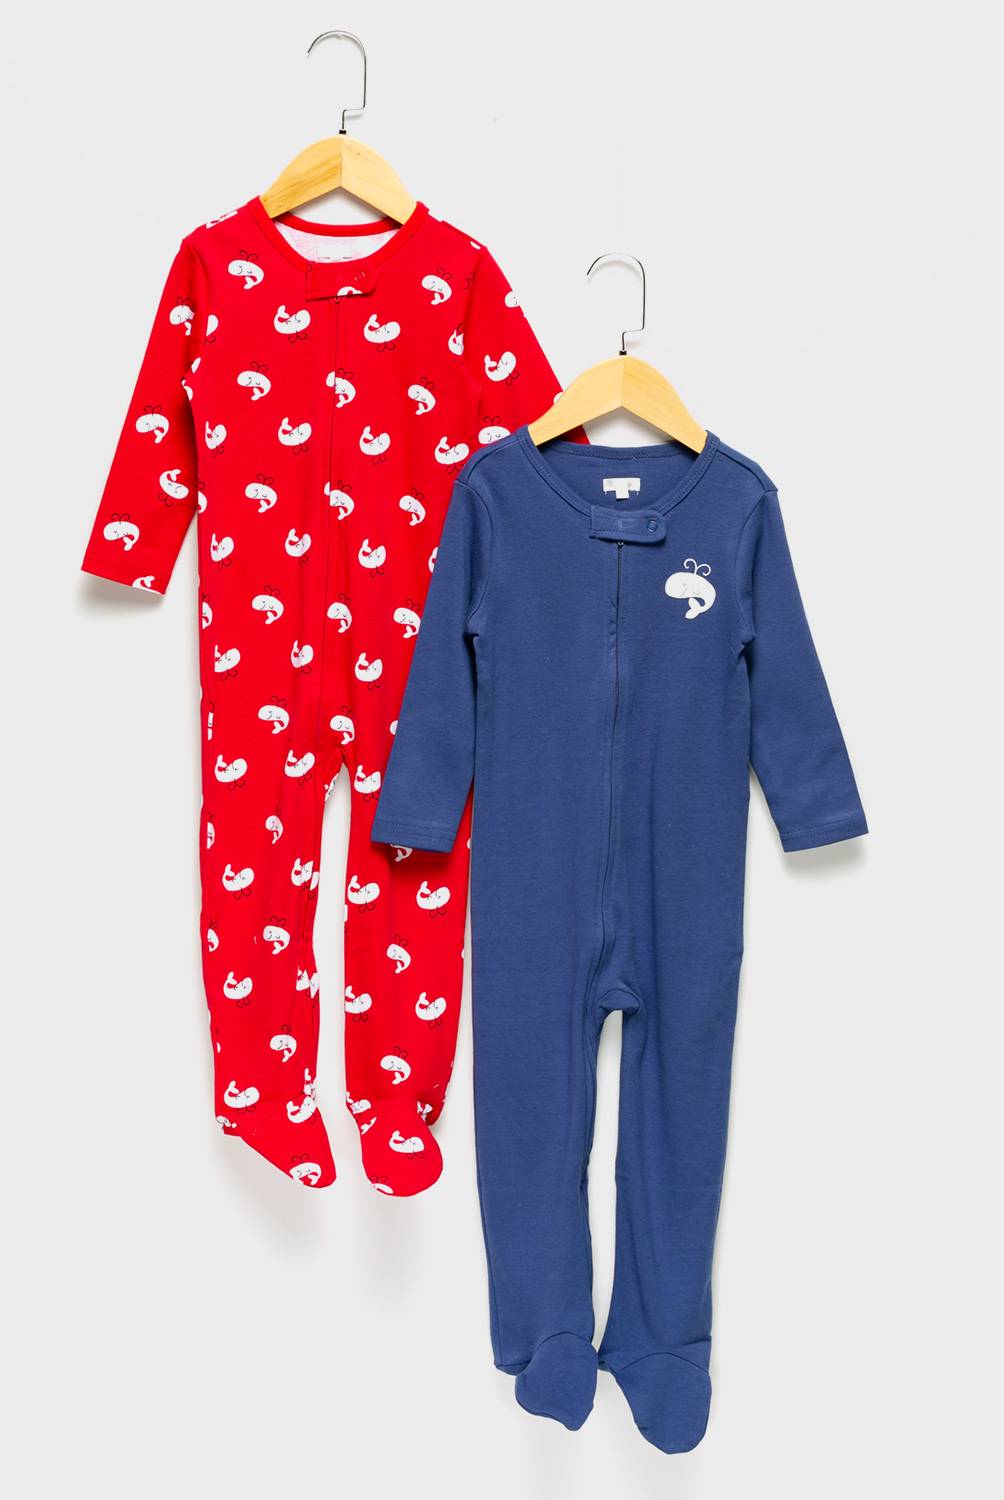 YAMP - Pijama Pack De 2 Unidades Algodón Bebé Niño